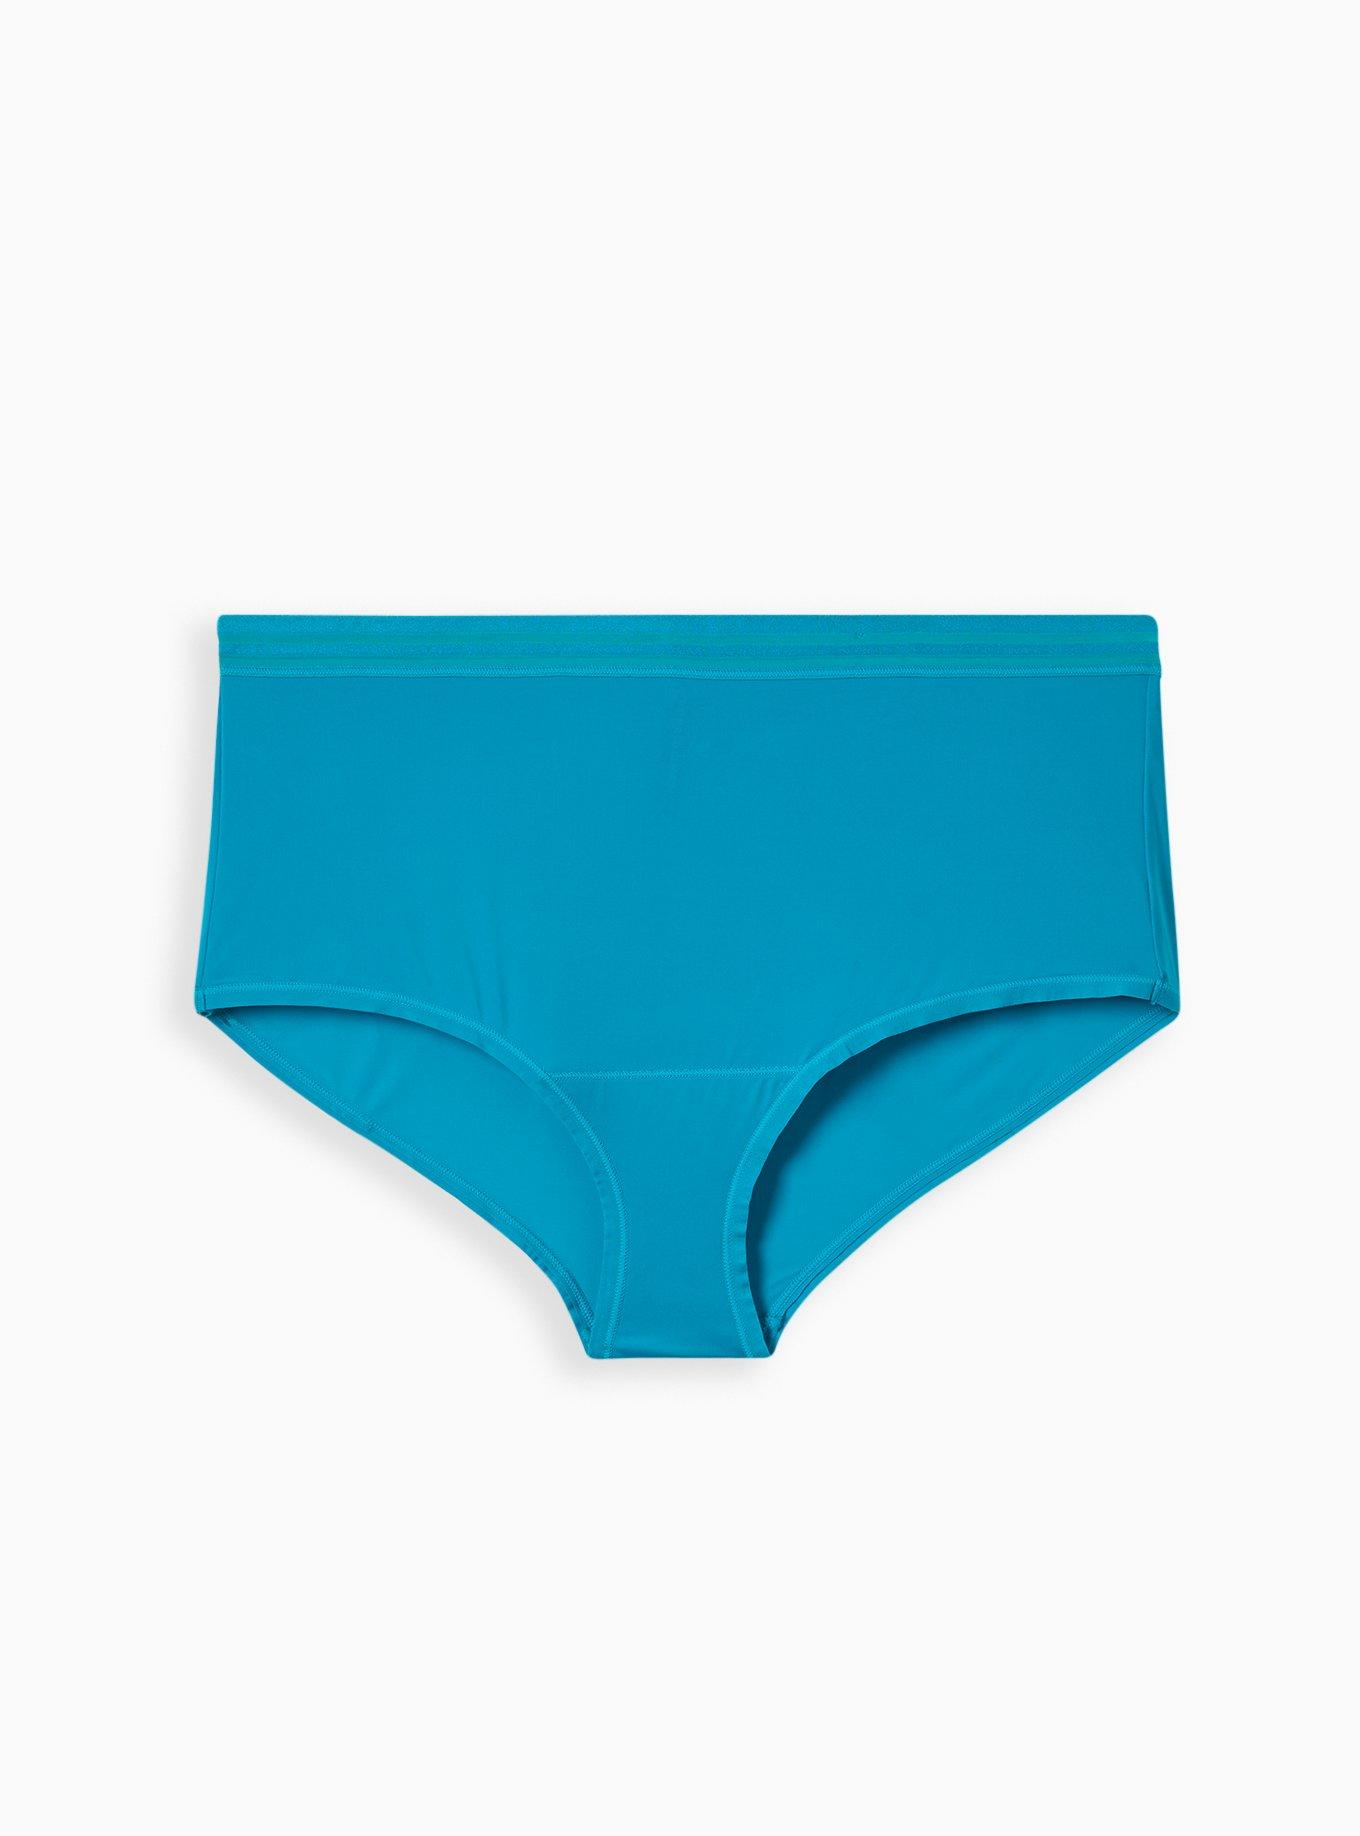 St. Eve Micro Bikini Panties Nylon/Spandex 2 Pk Blue Stripe/Navy - U Pick  Size